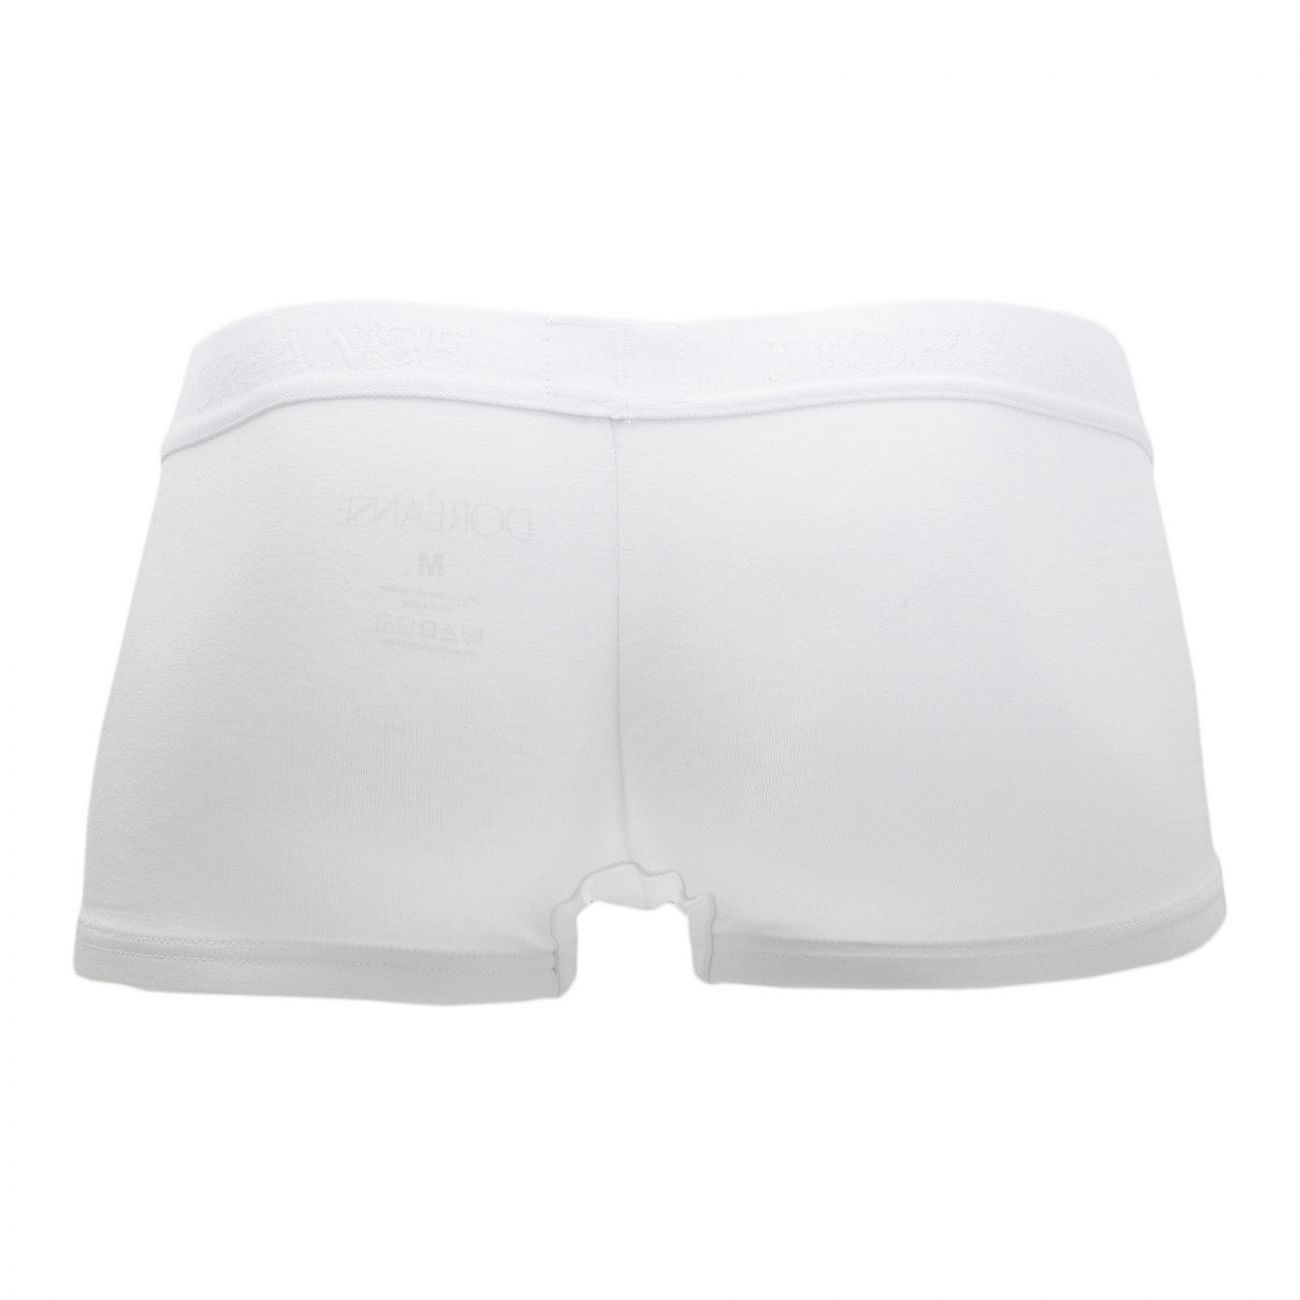 Mens Underwear: Doreanse 1760-WHT Low-rise Trunk | eBay